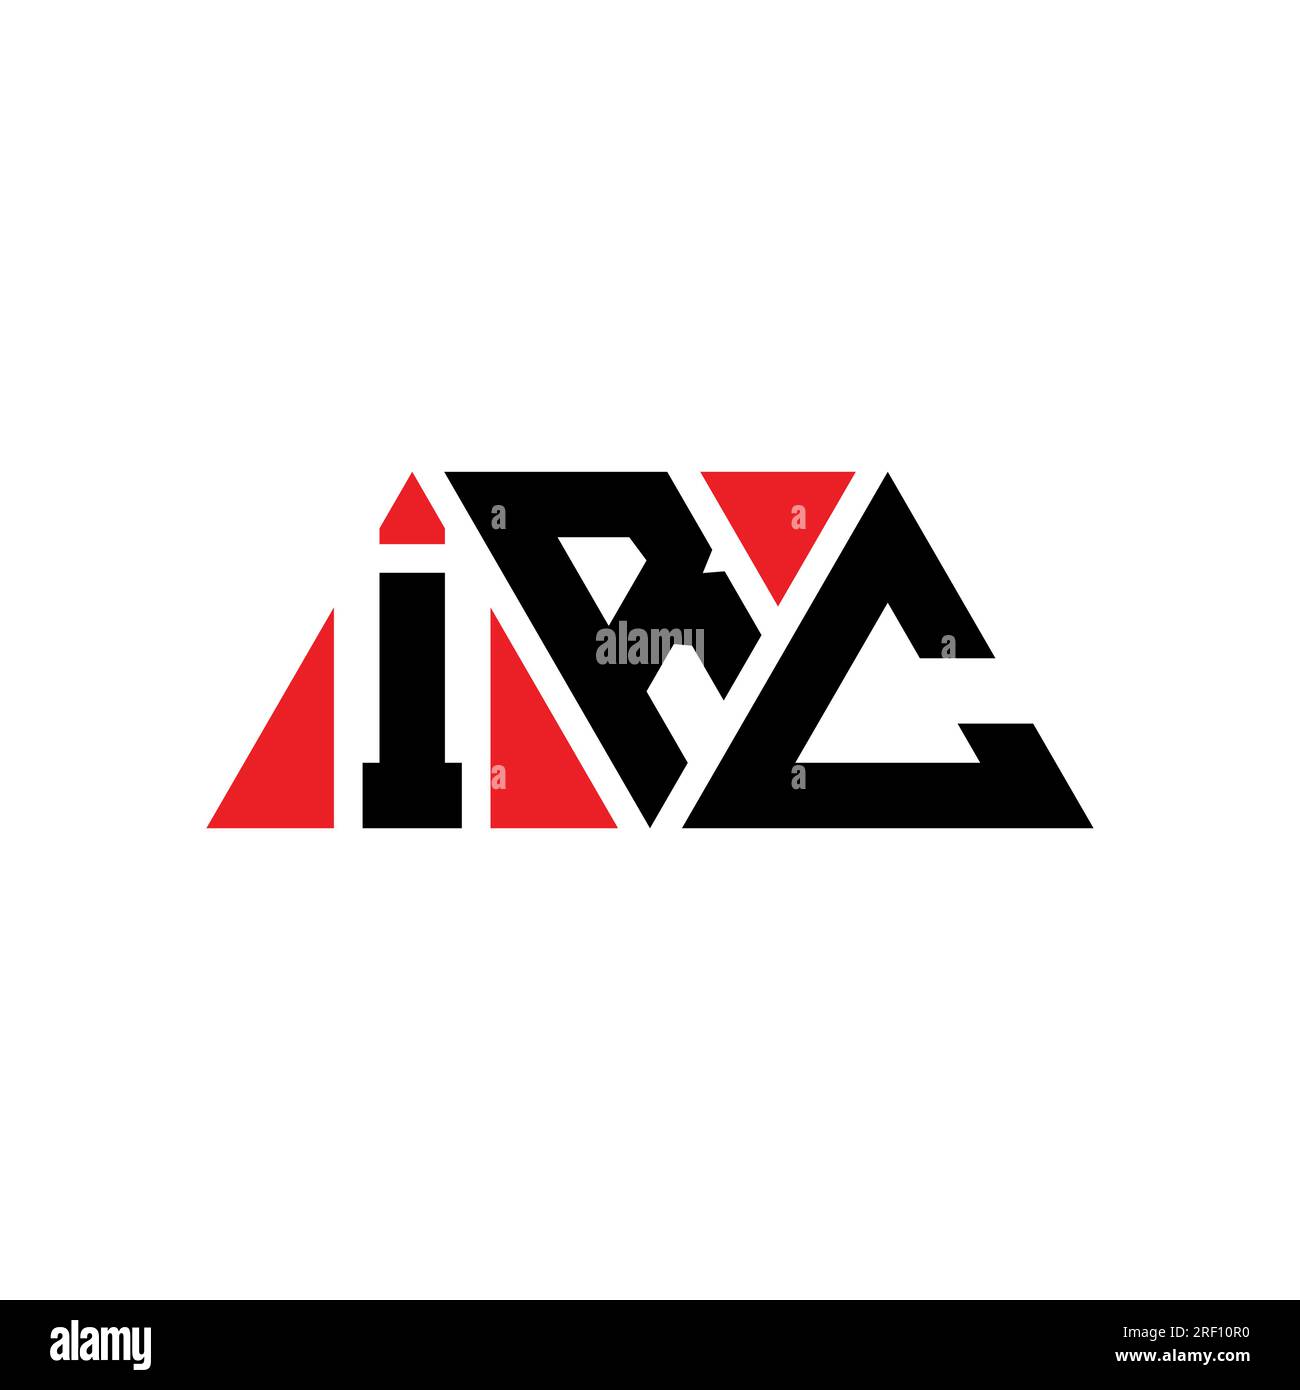 IRC Logo PNG Transparent & SVG Vector - Freebie Supply